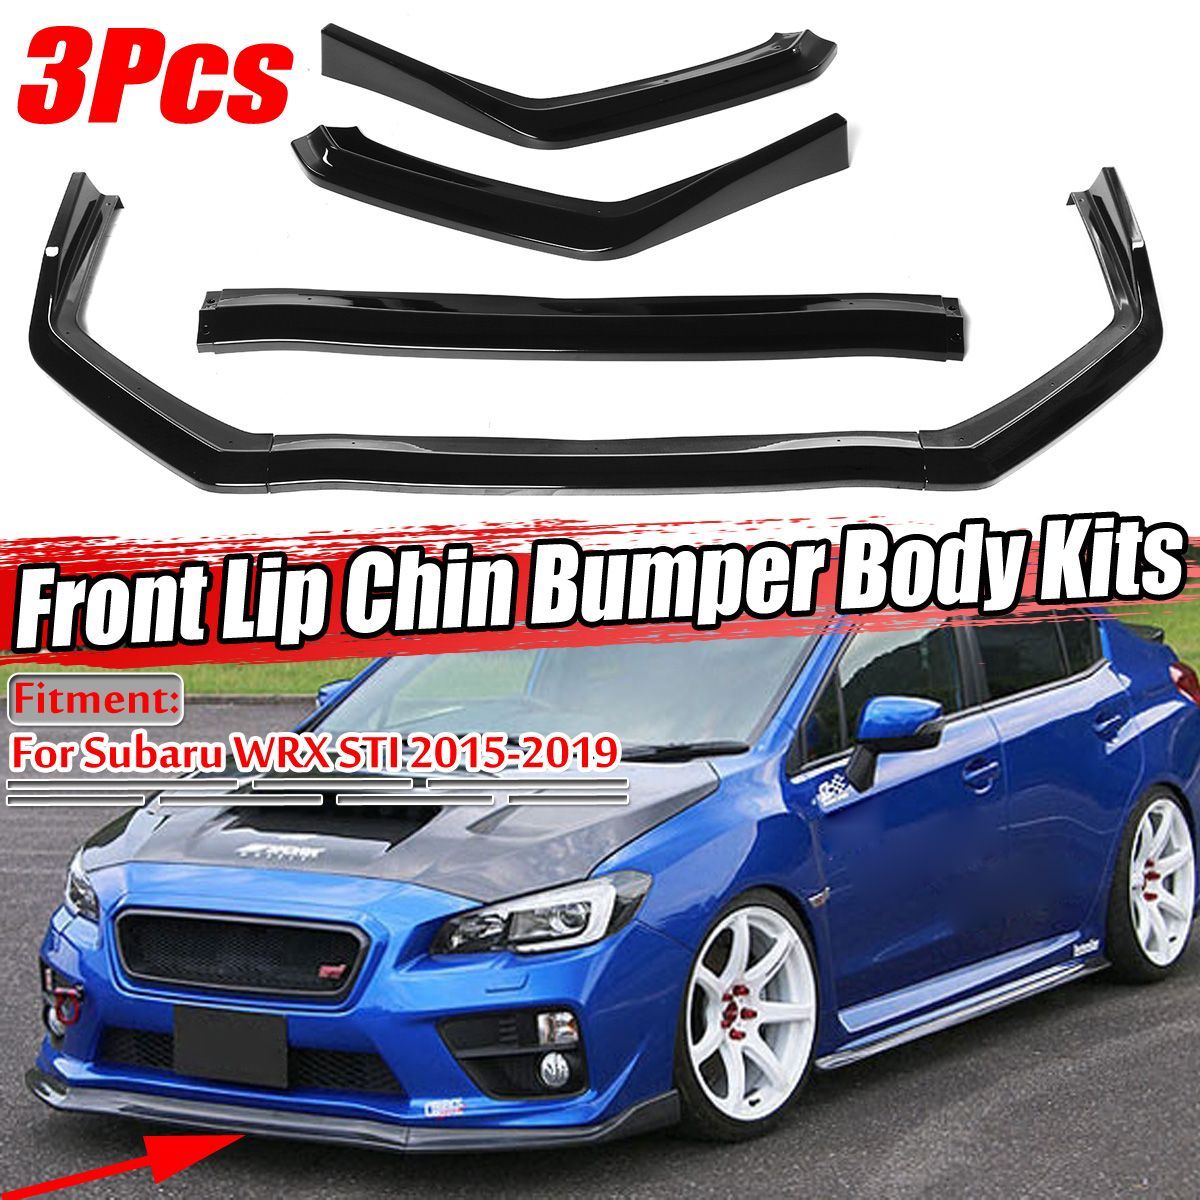 3Pcs-Glossy-Black-Front-Lip-Chin-Bumper-Body-Kits-For-Subaru-WRX-STI-2015-2019-1684878